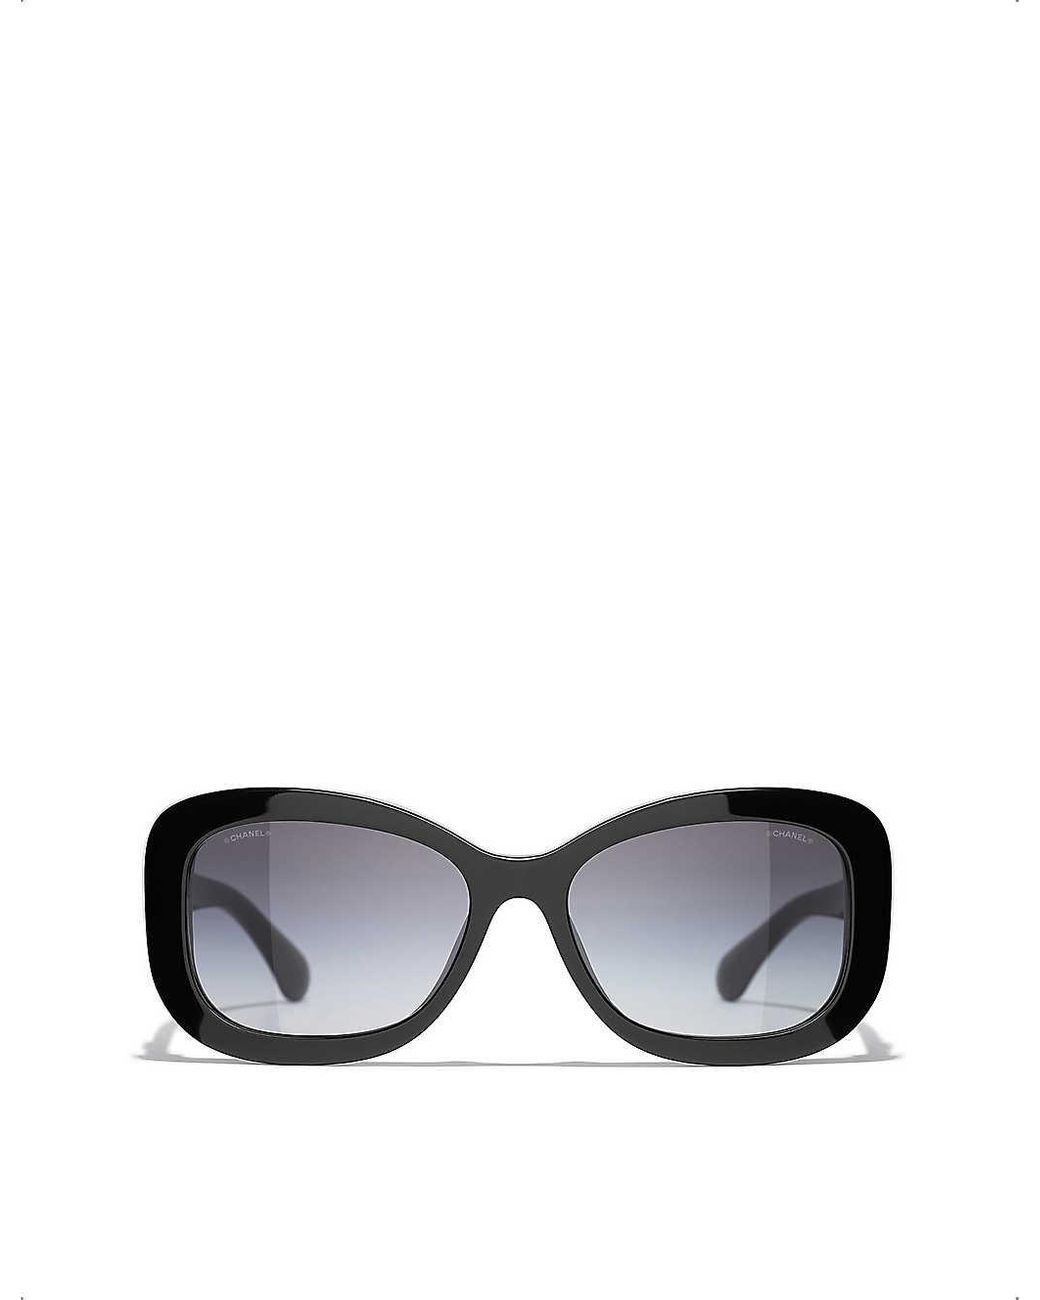 Chanel Rectangle Sunglasses in Black